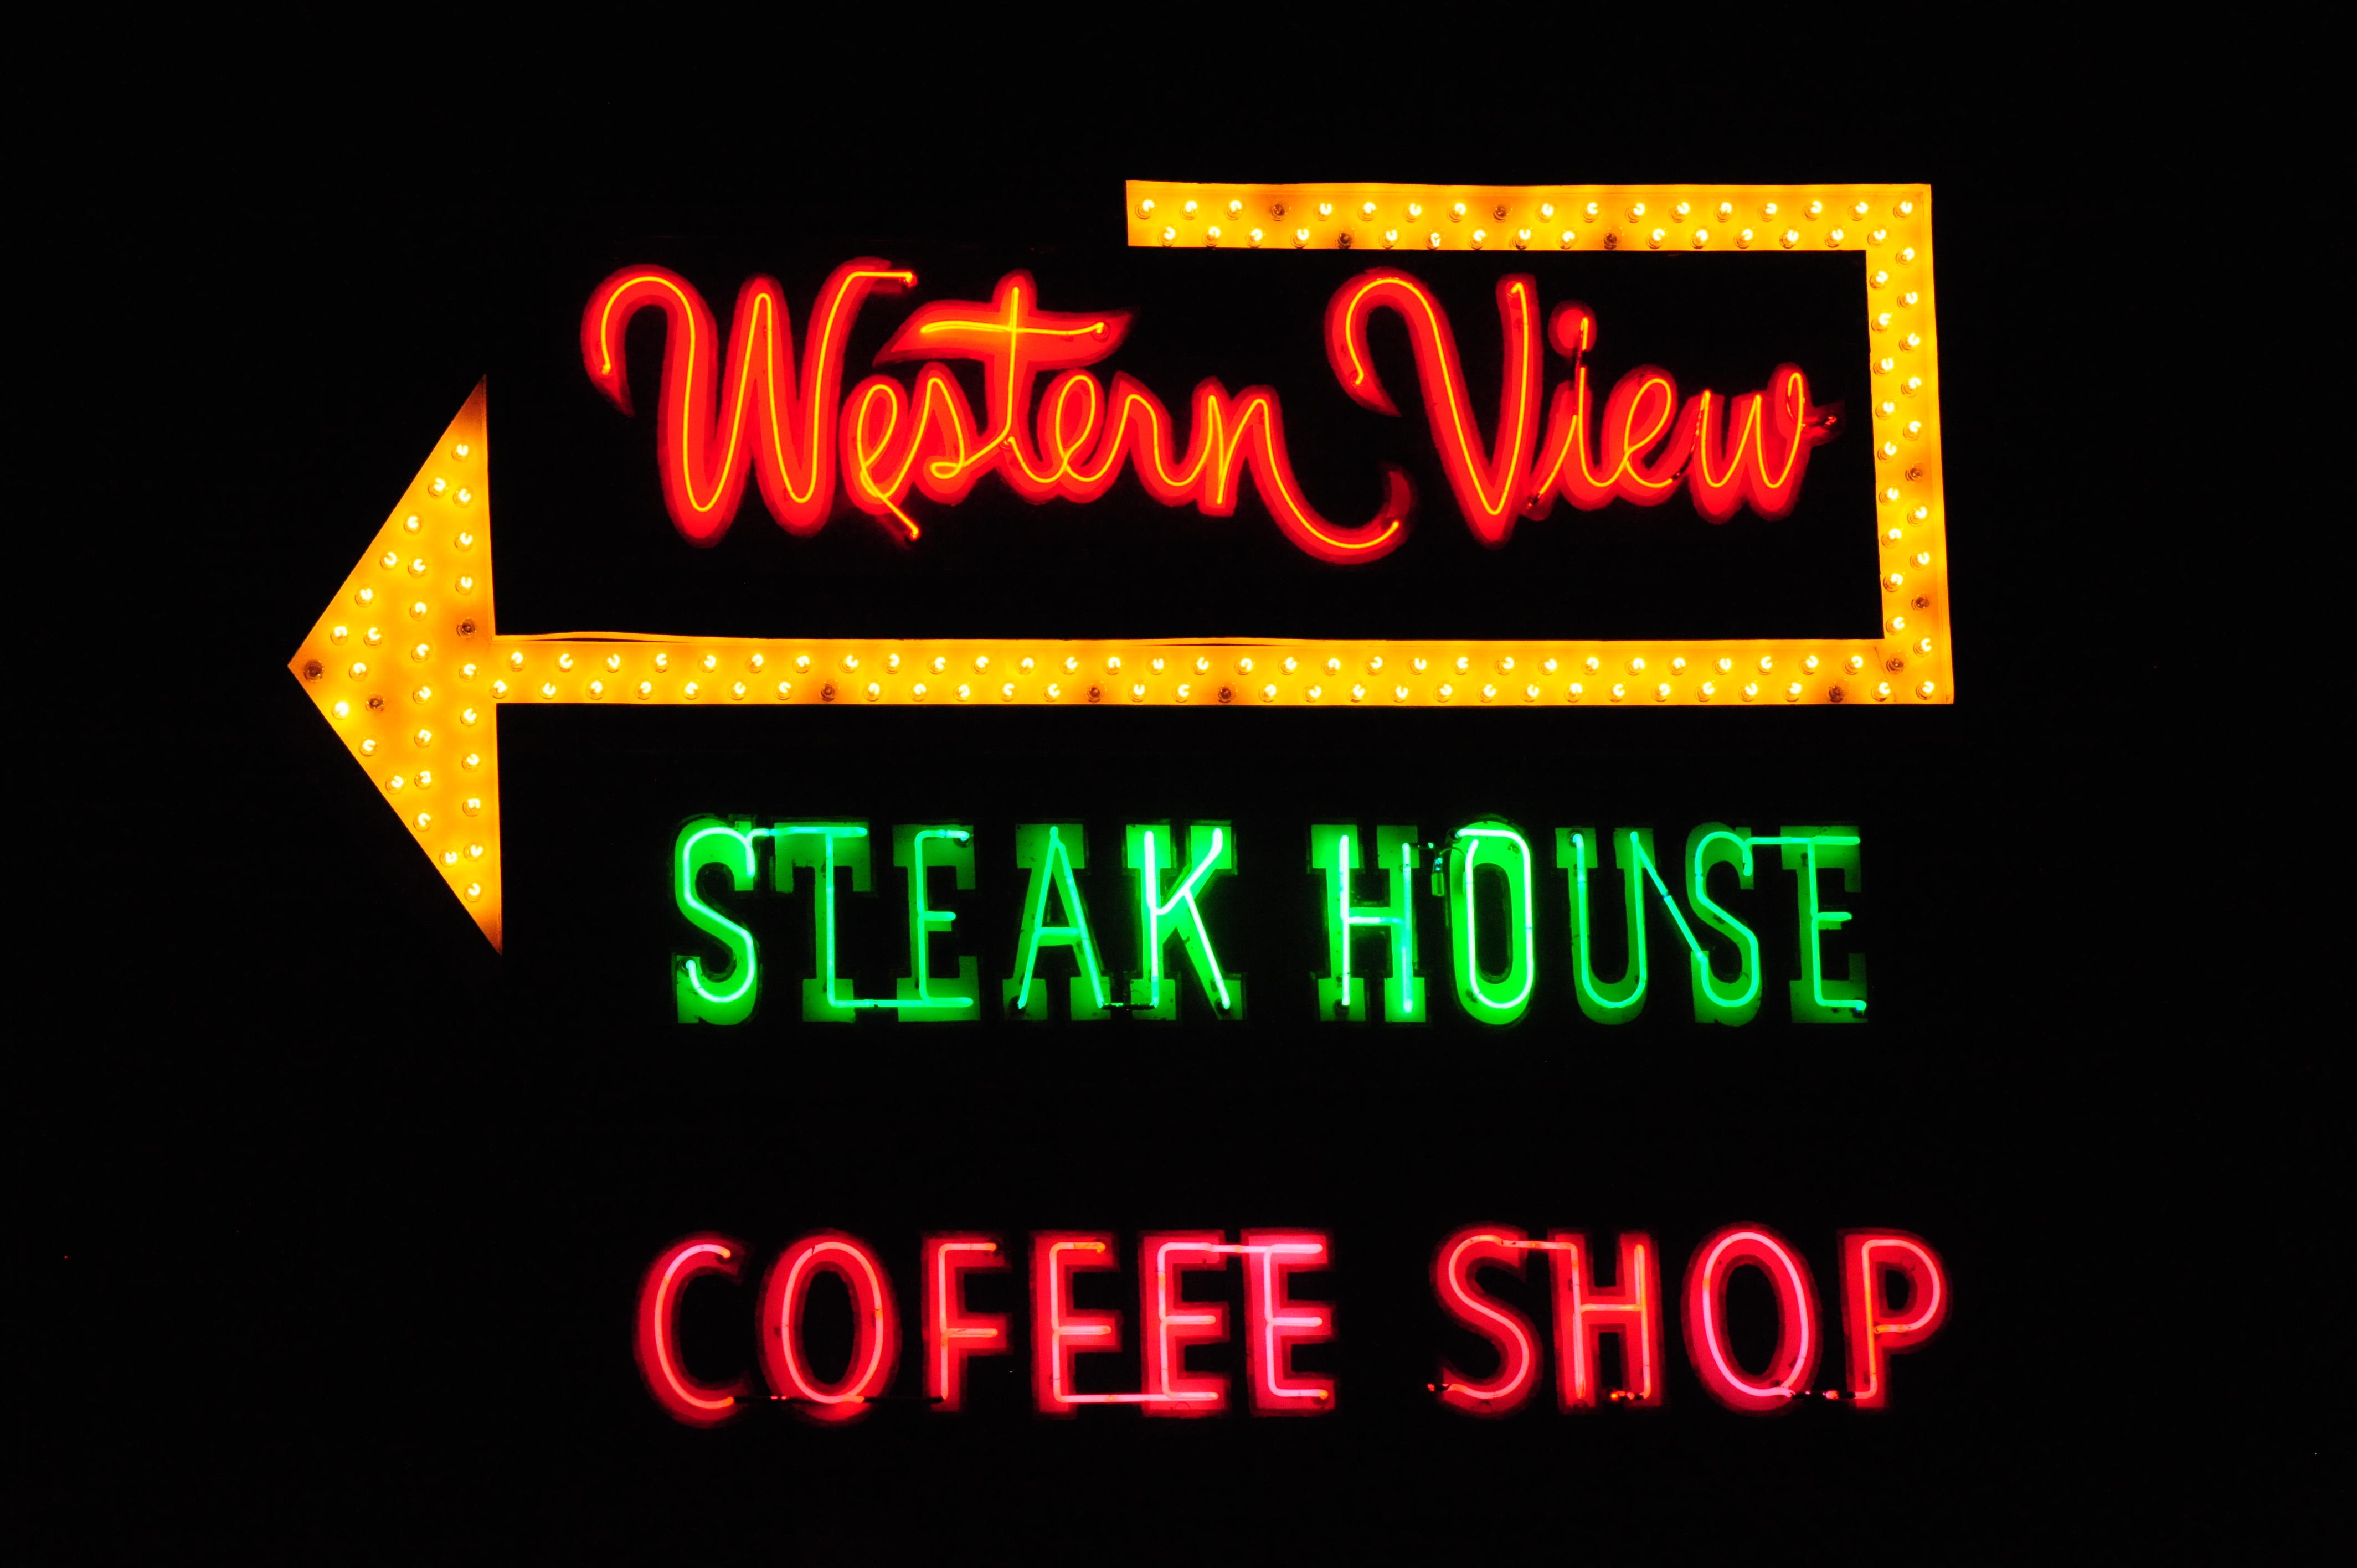 Western View Steak House